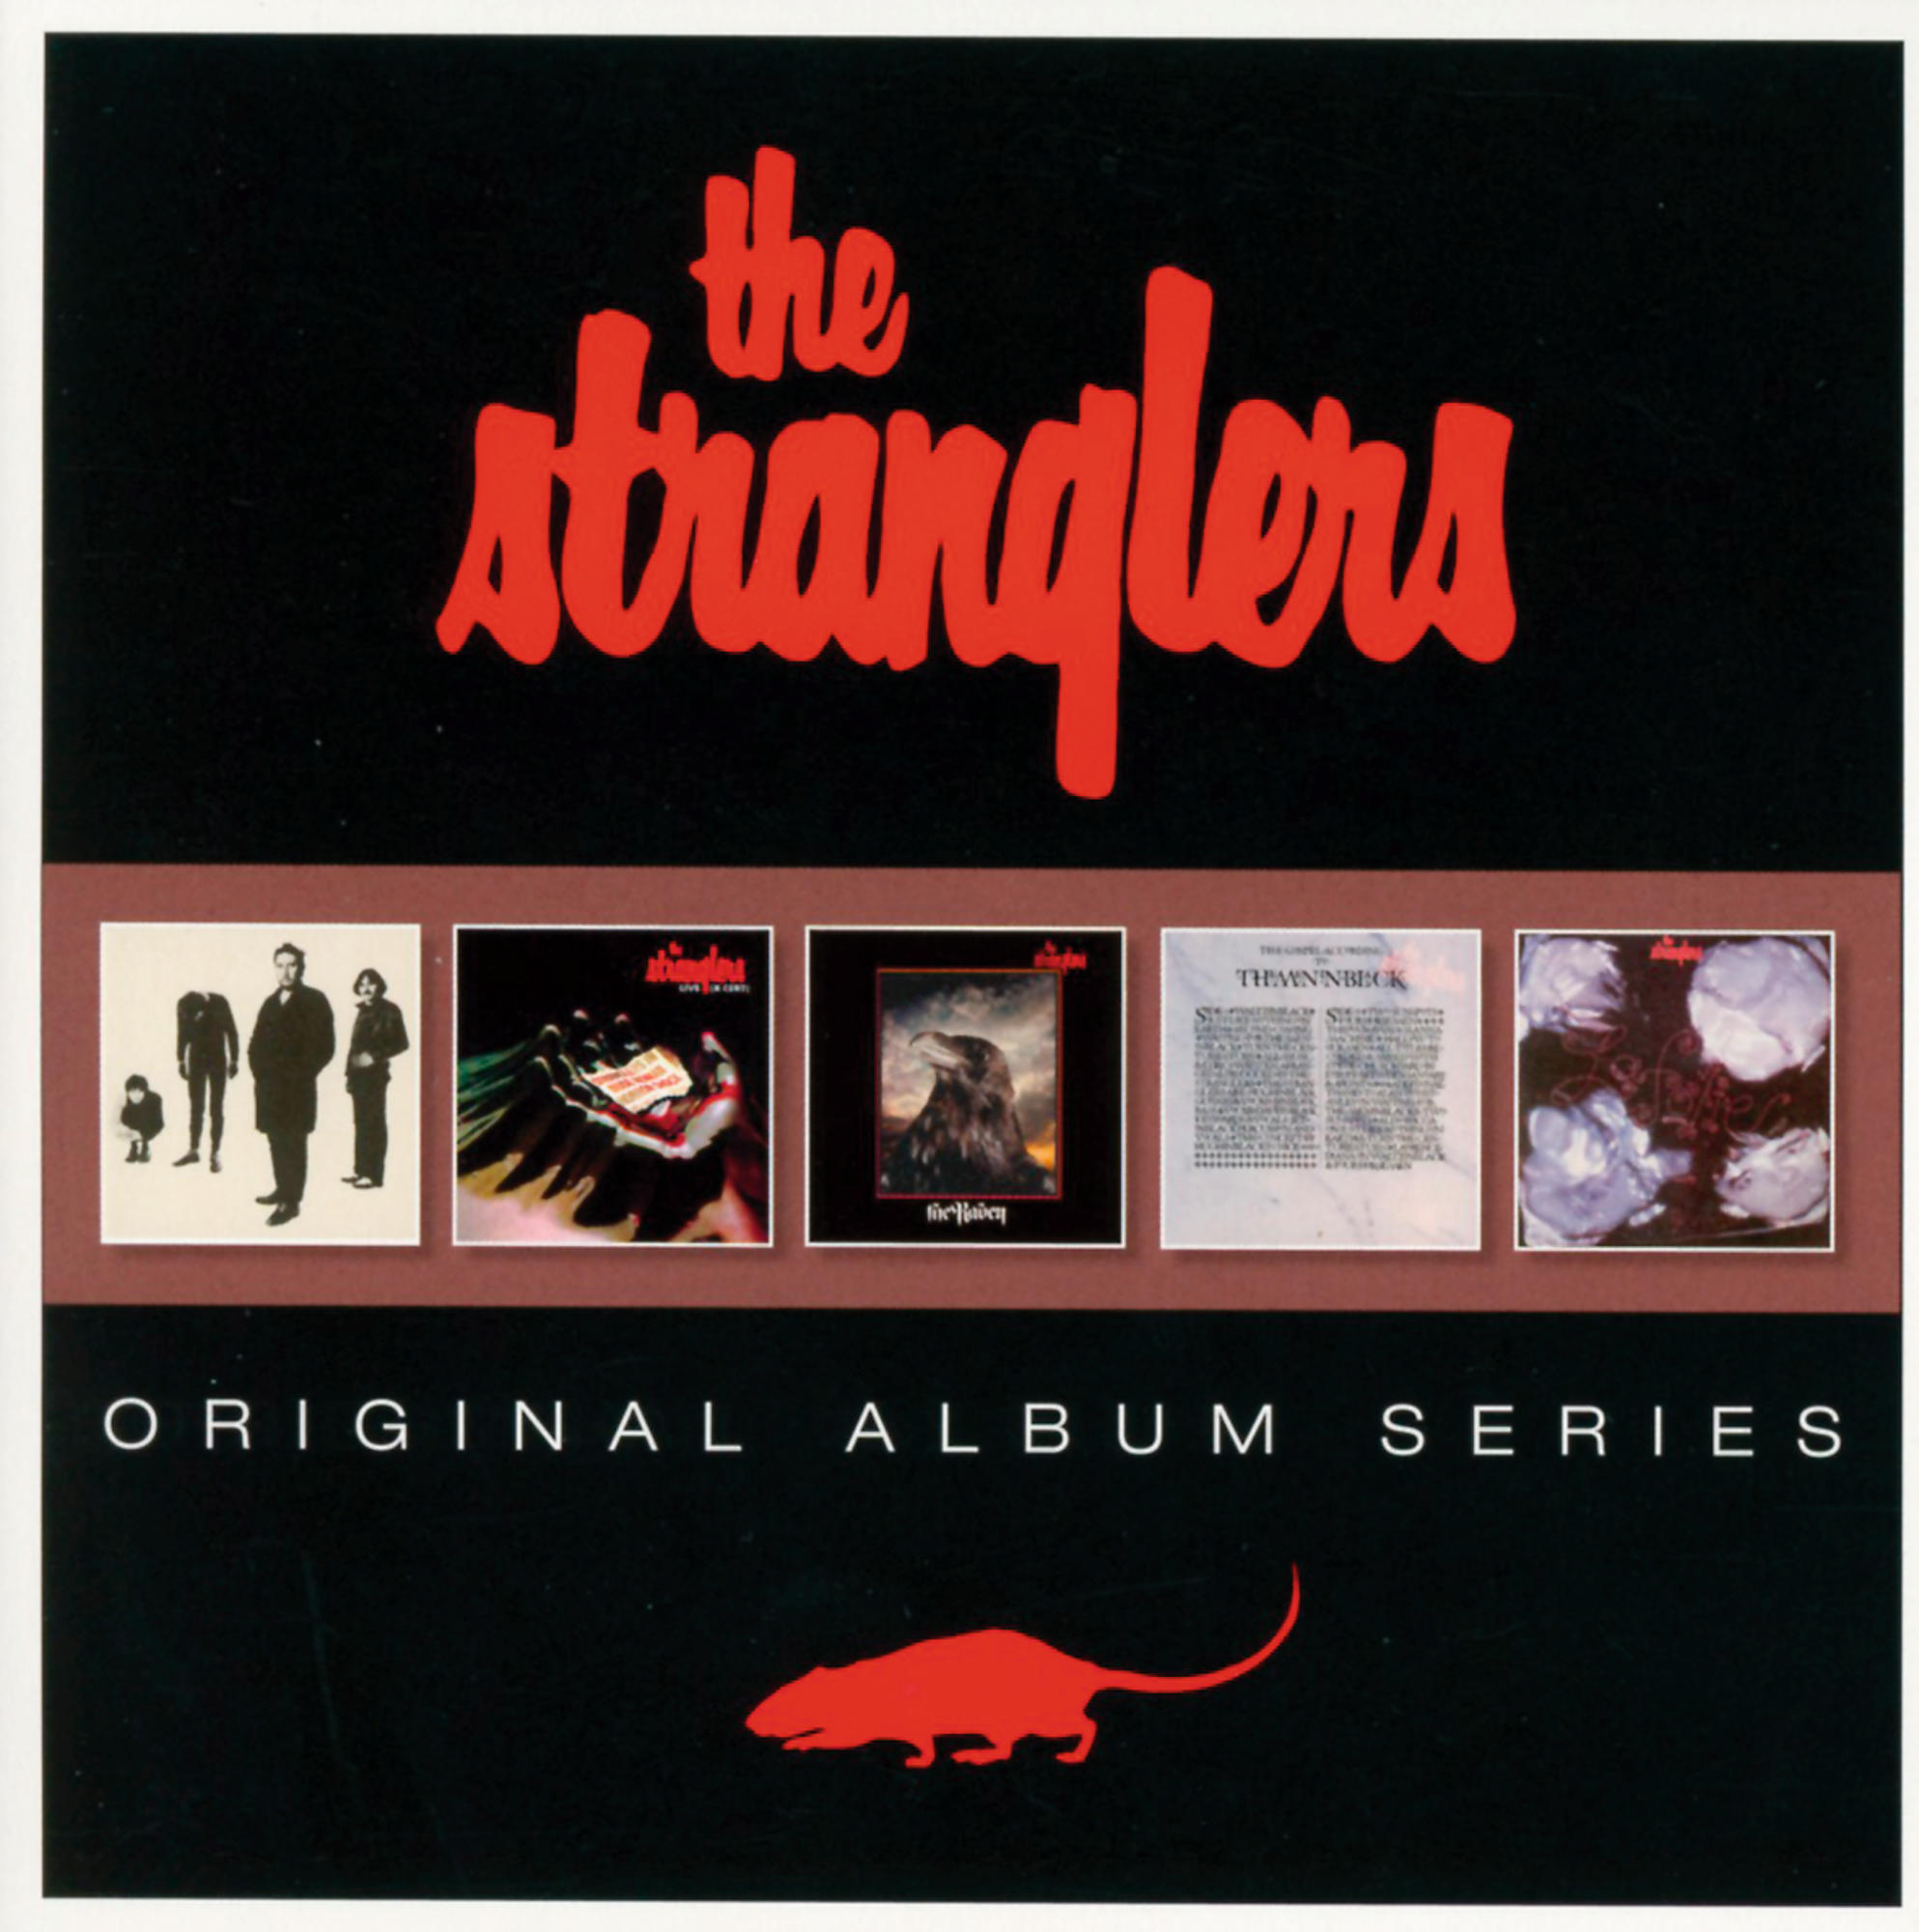 Original Album Stranglers Series The - - (CD)